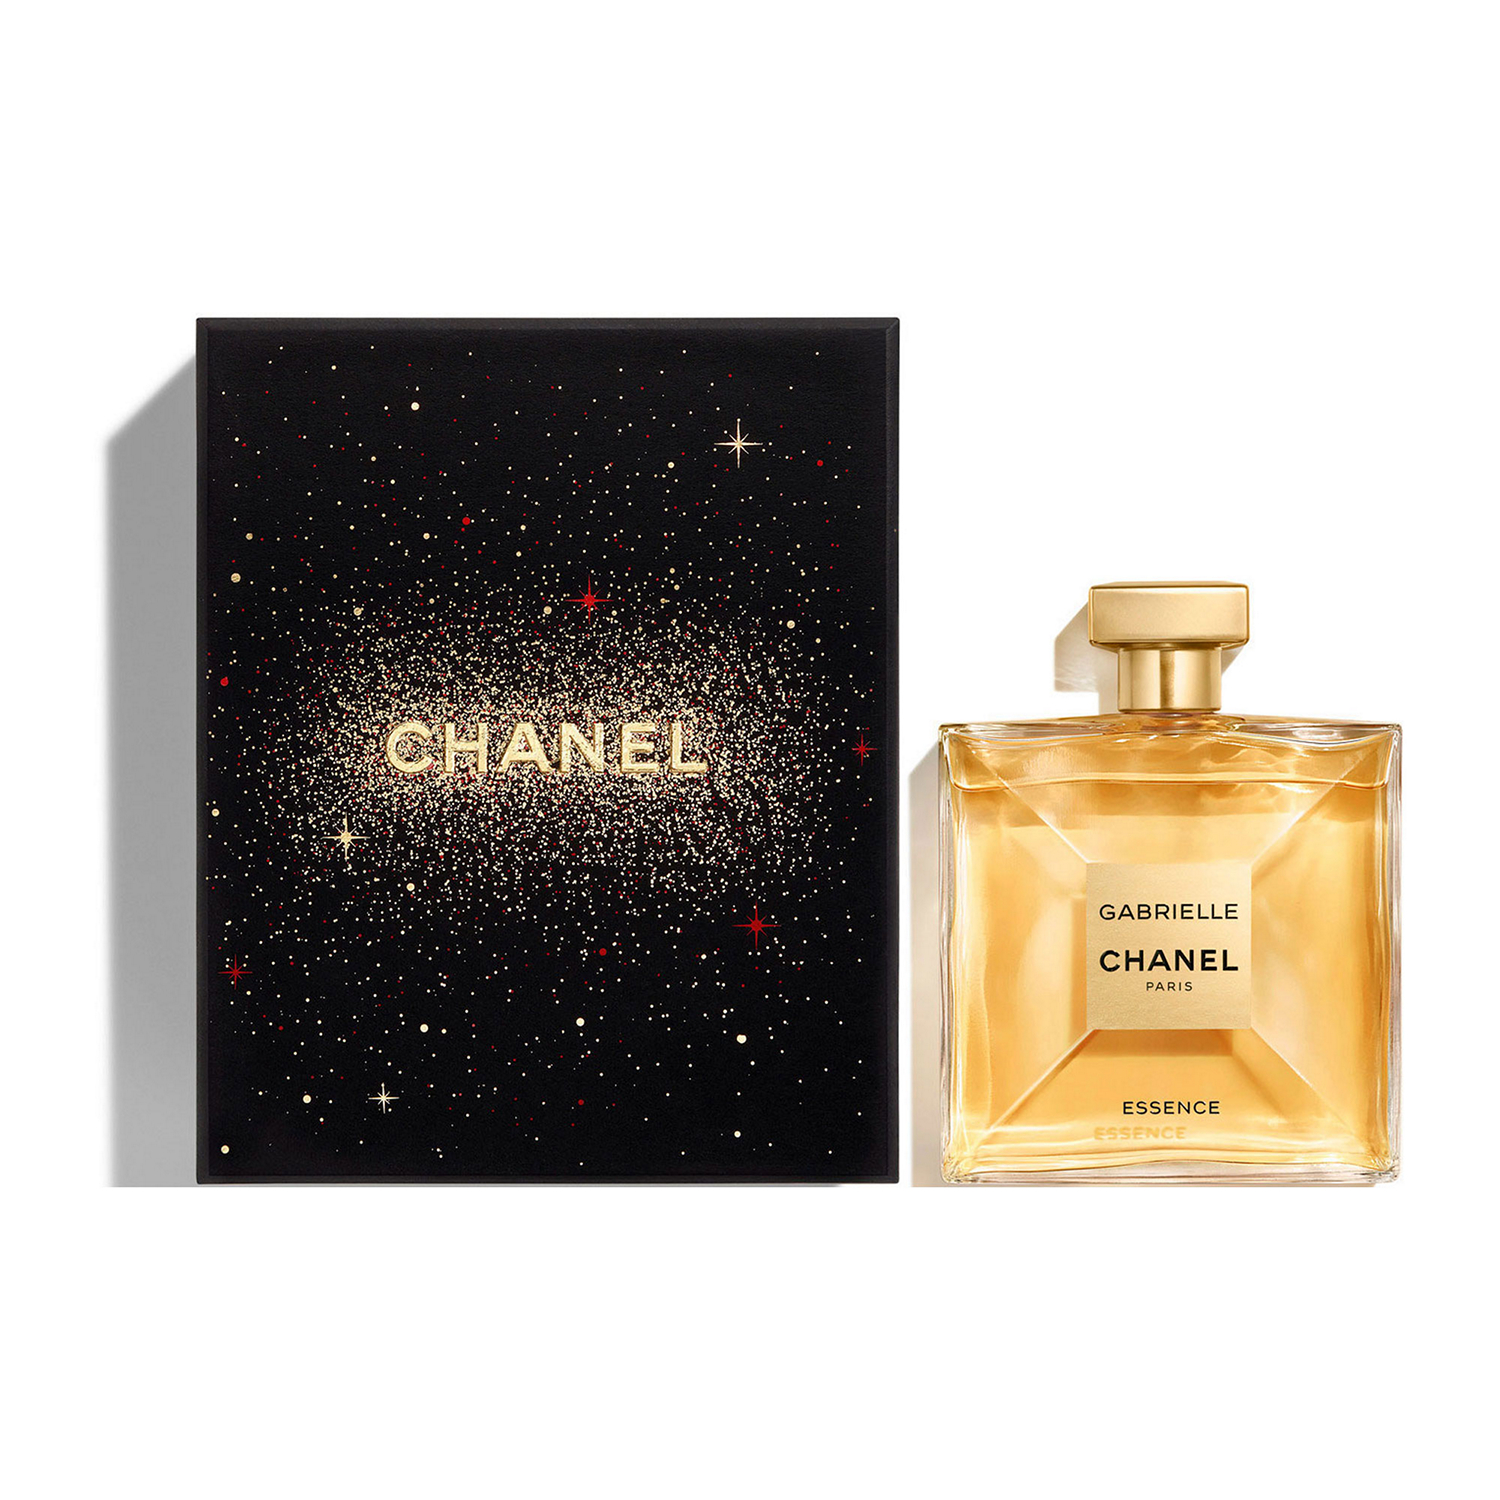 CHANEL Gabrielle Chanel Essence 100ml Gift Box